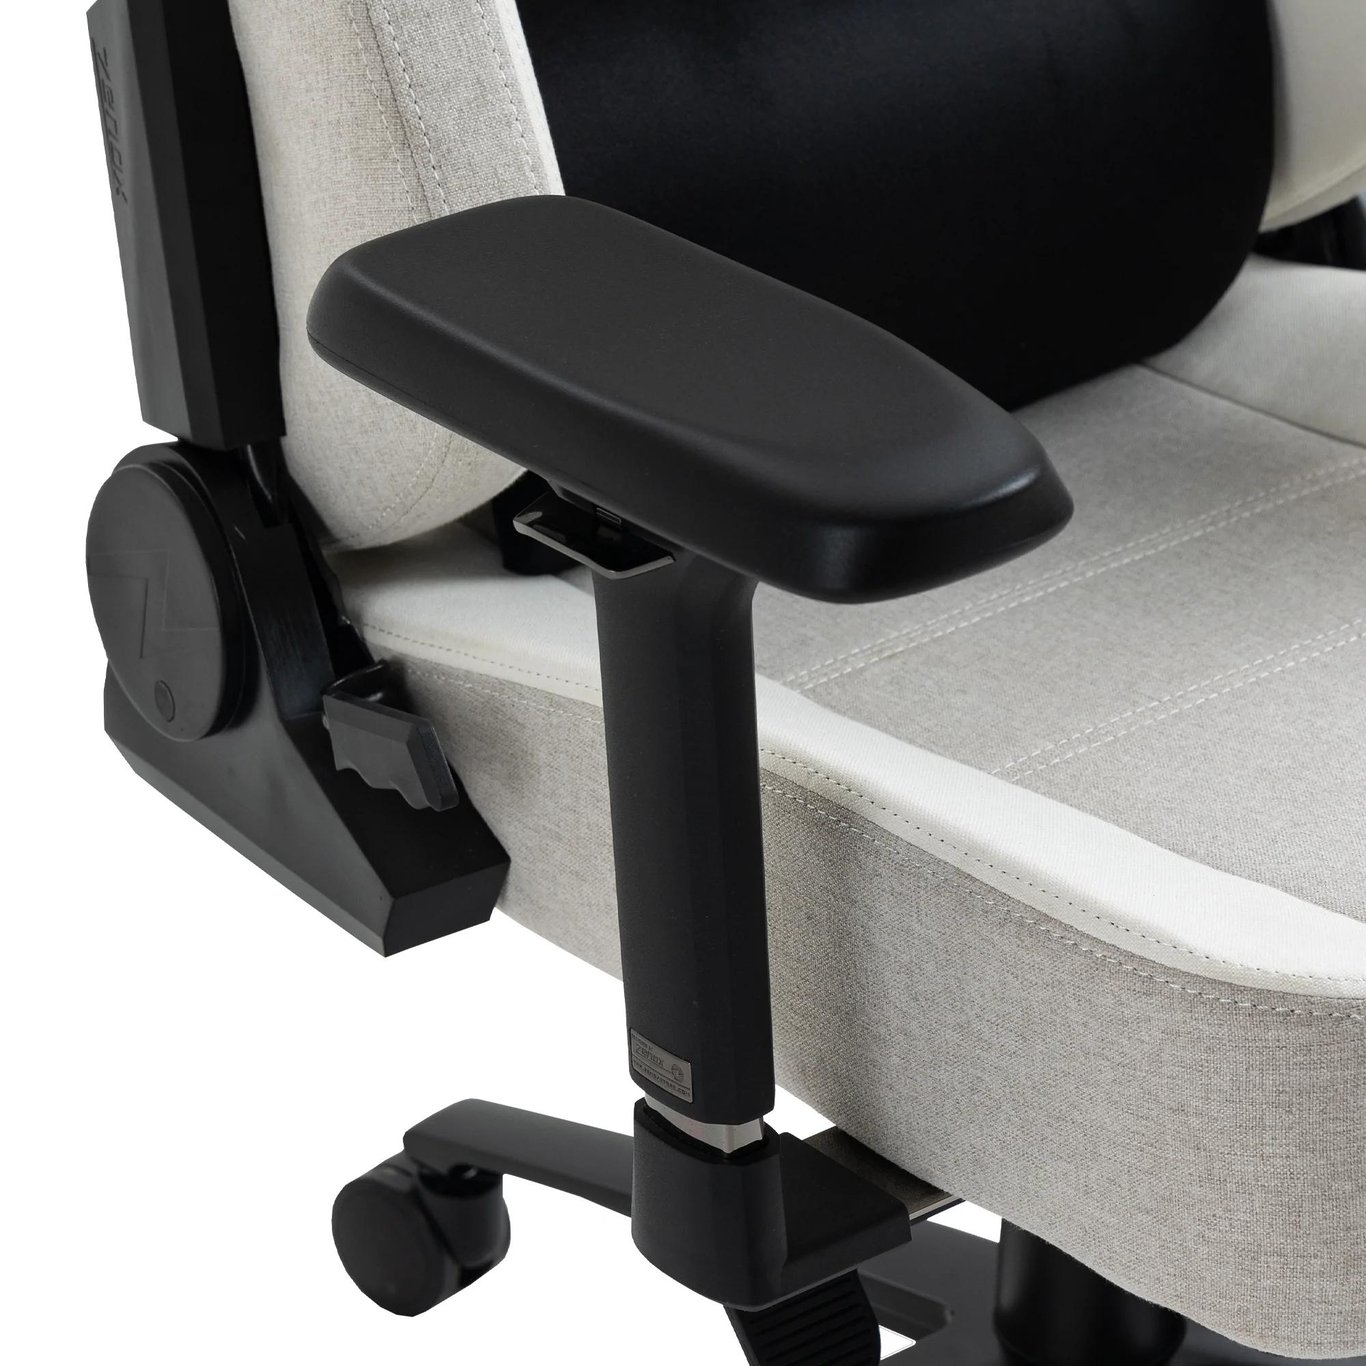 Zenox Spectre-MK2 Racing Chair  - Fabric/Light Grey /-5